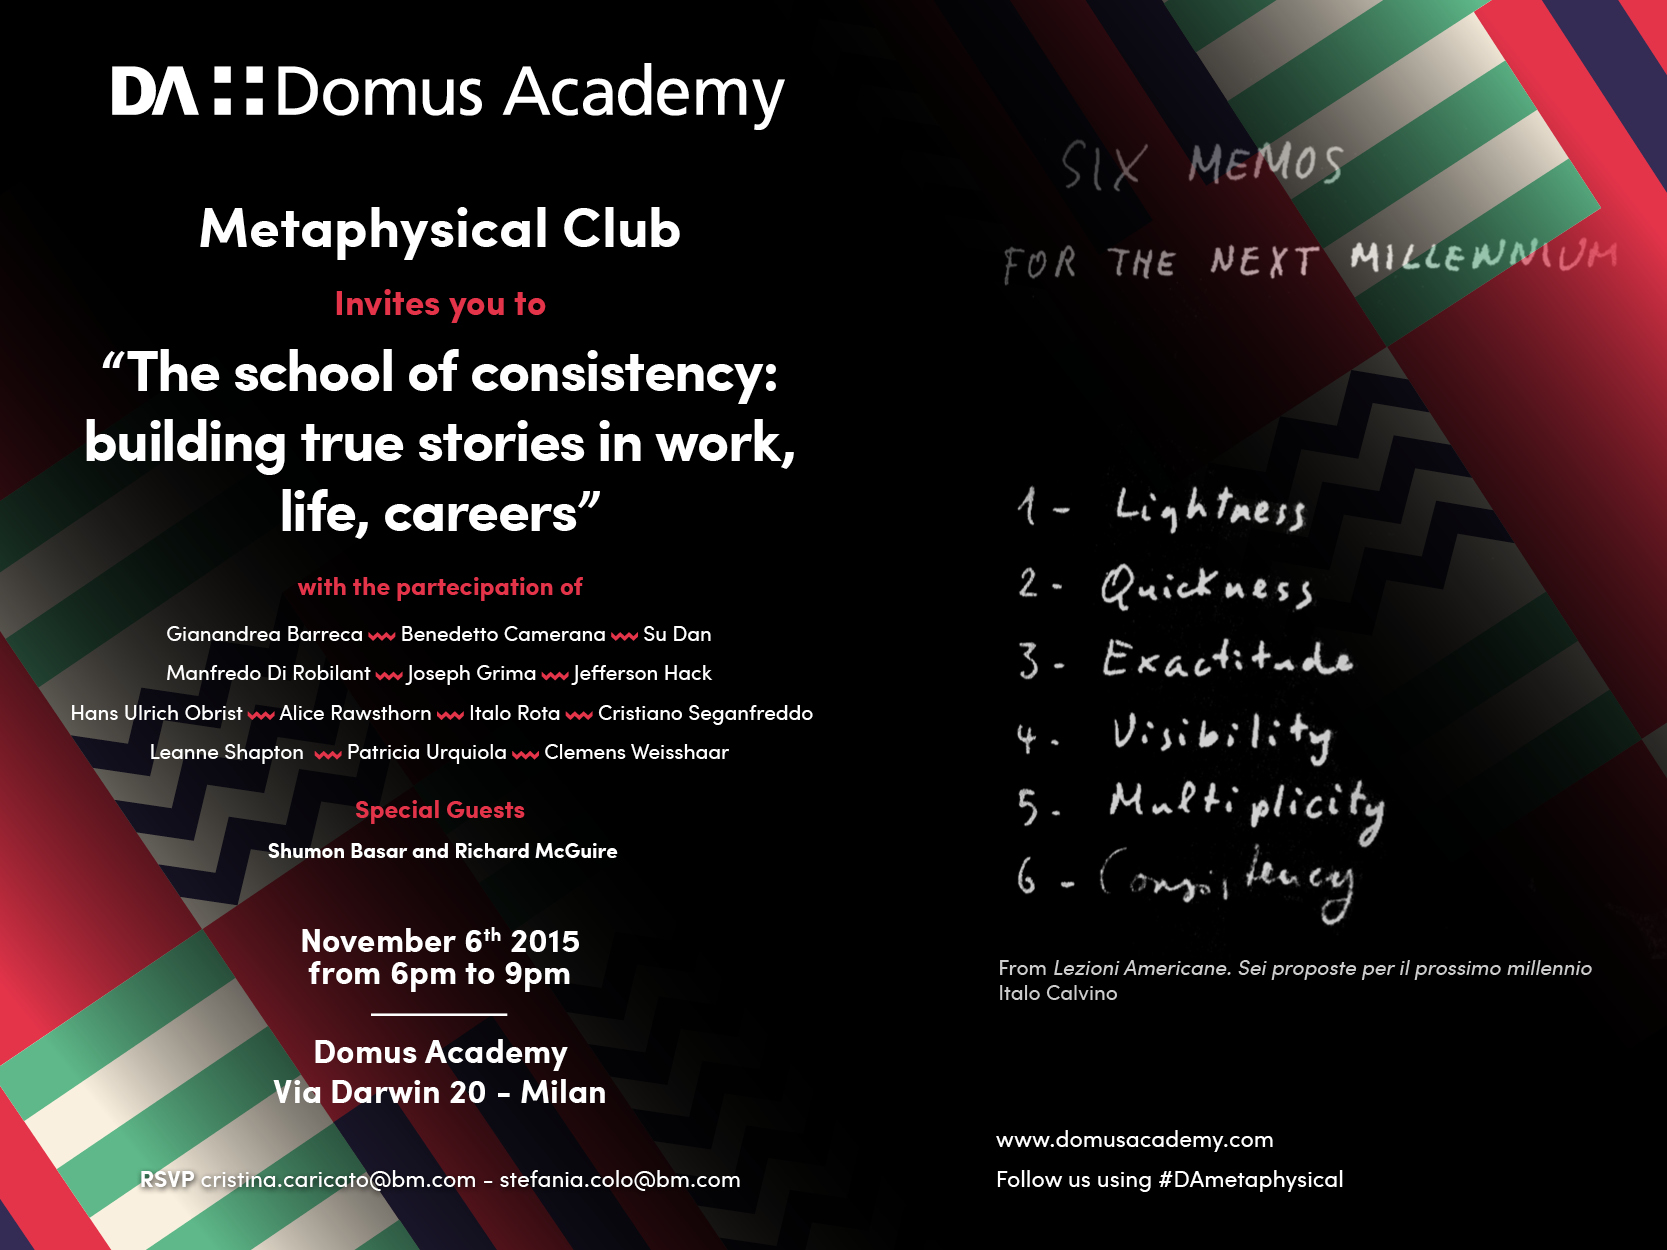 Domus Academy Metaphysical Club